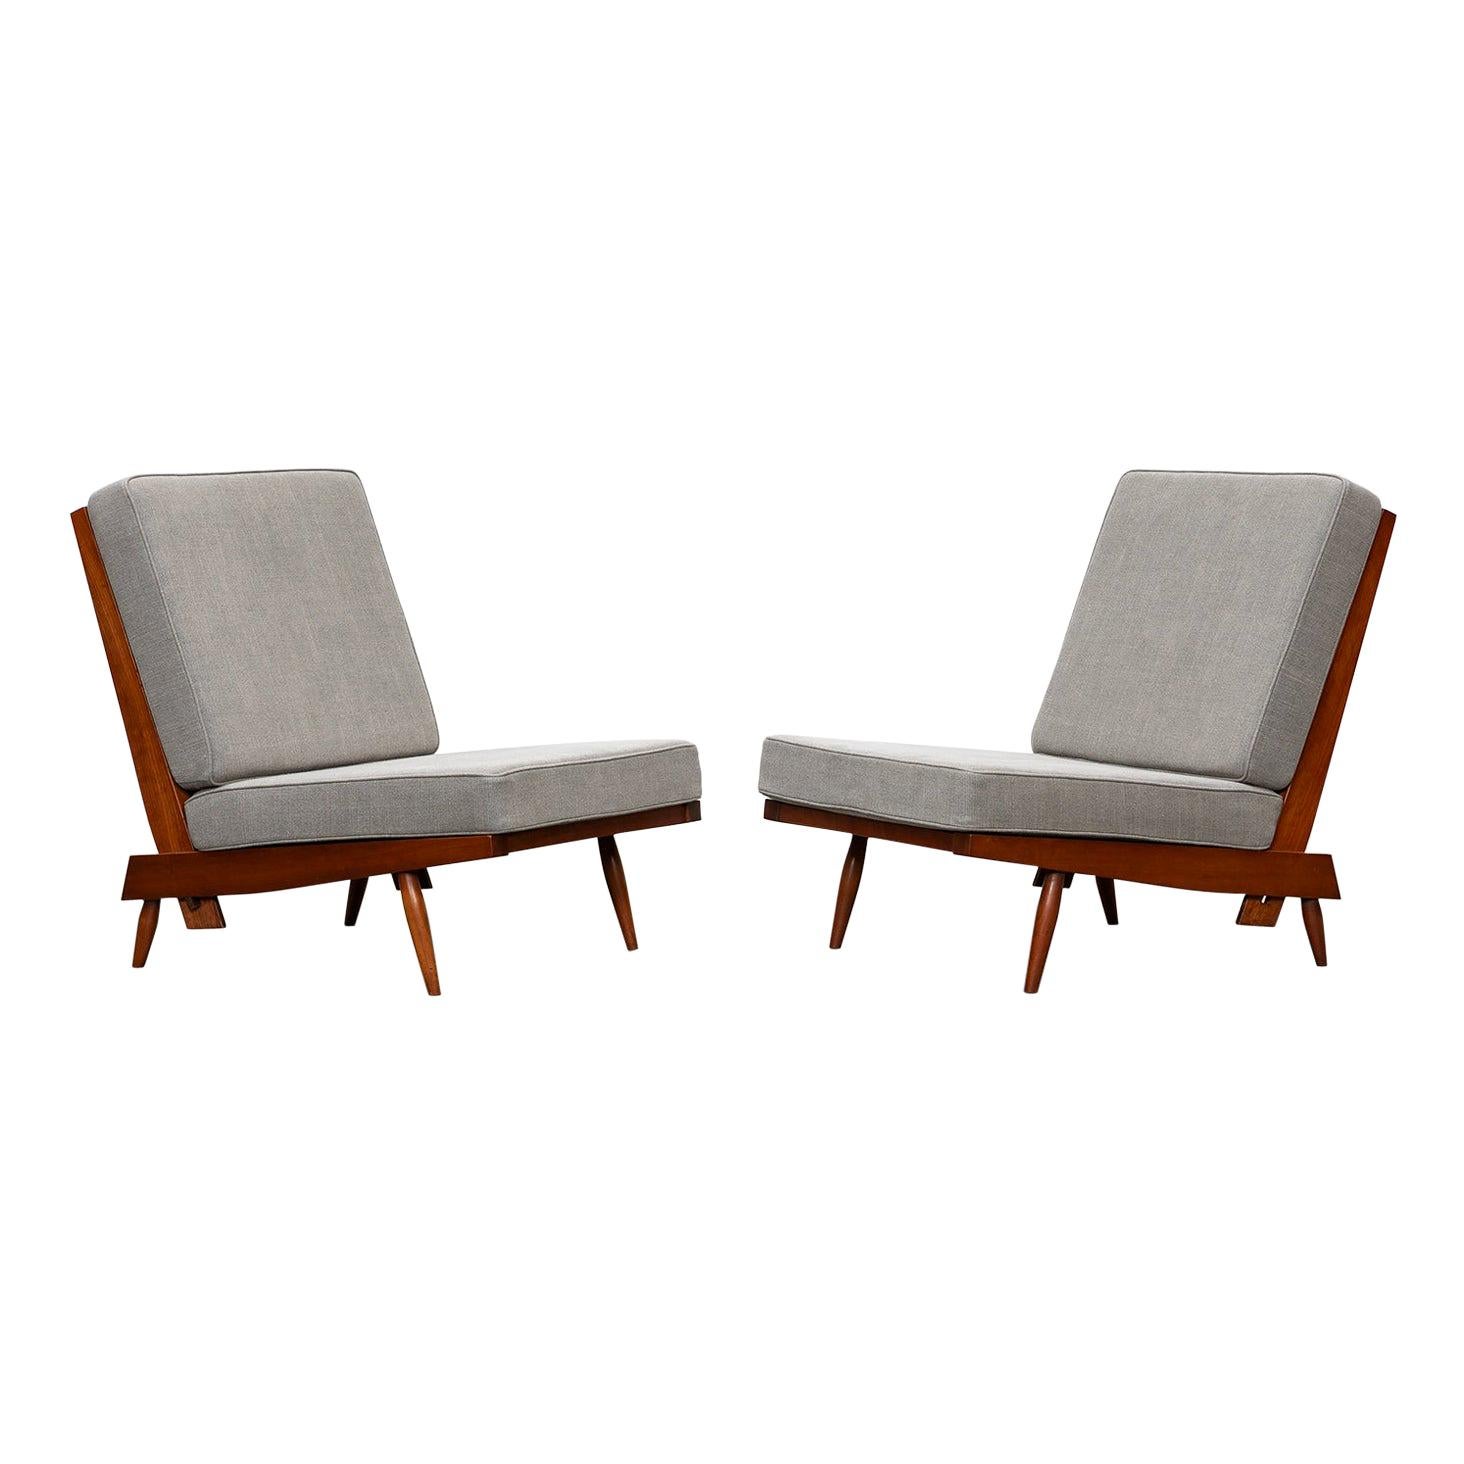 1960s Walnut, Grey Upholstery Lounge Chairs by George Nakashima